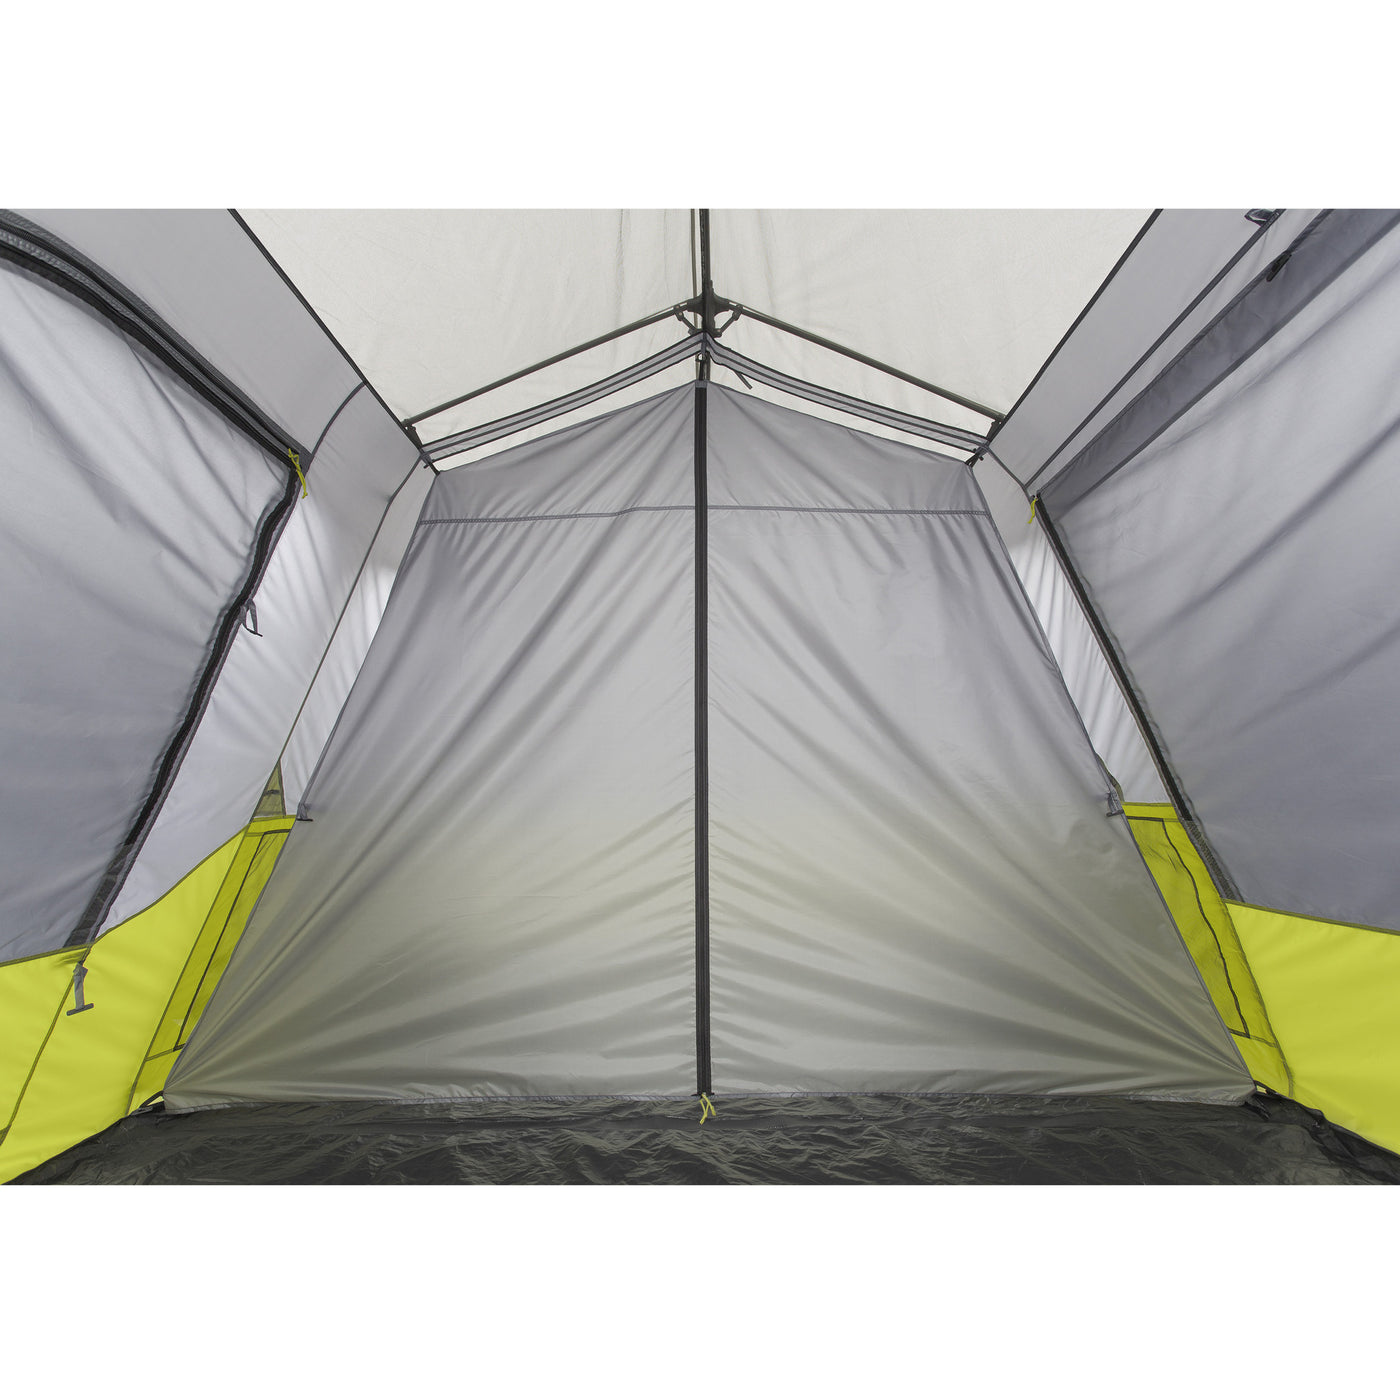 Core Equipment 9 Person Instant Cabin Tent Room Divider